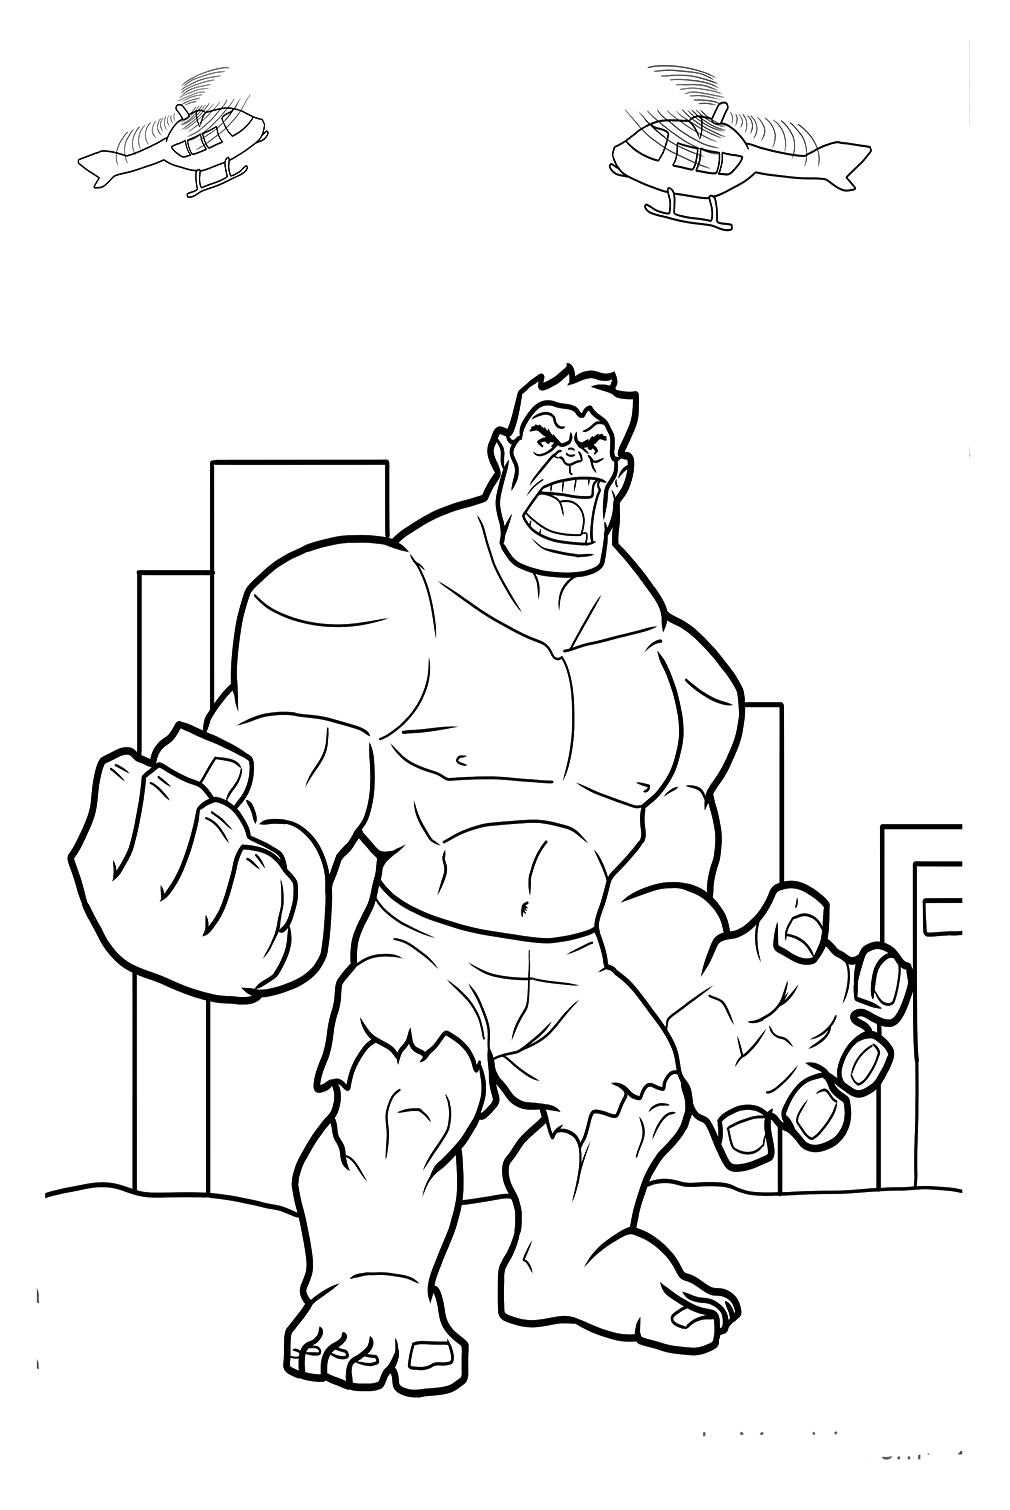 Boze Hulk kleurplaat van Hulk